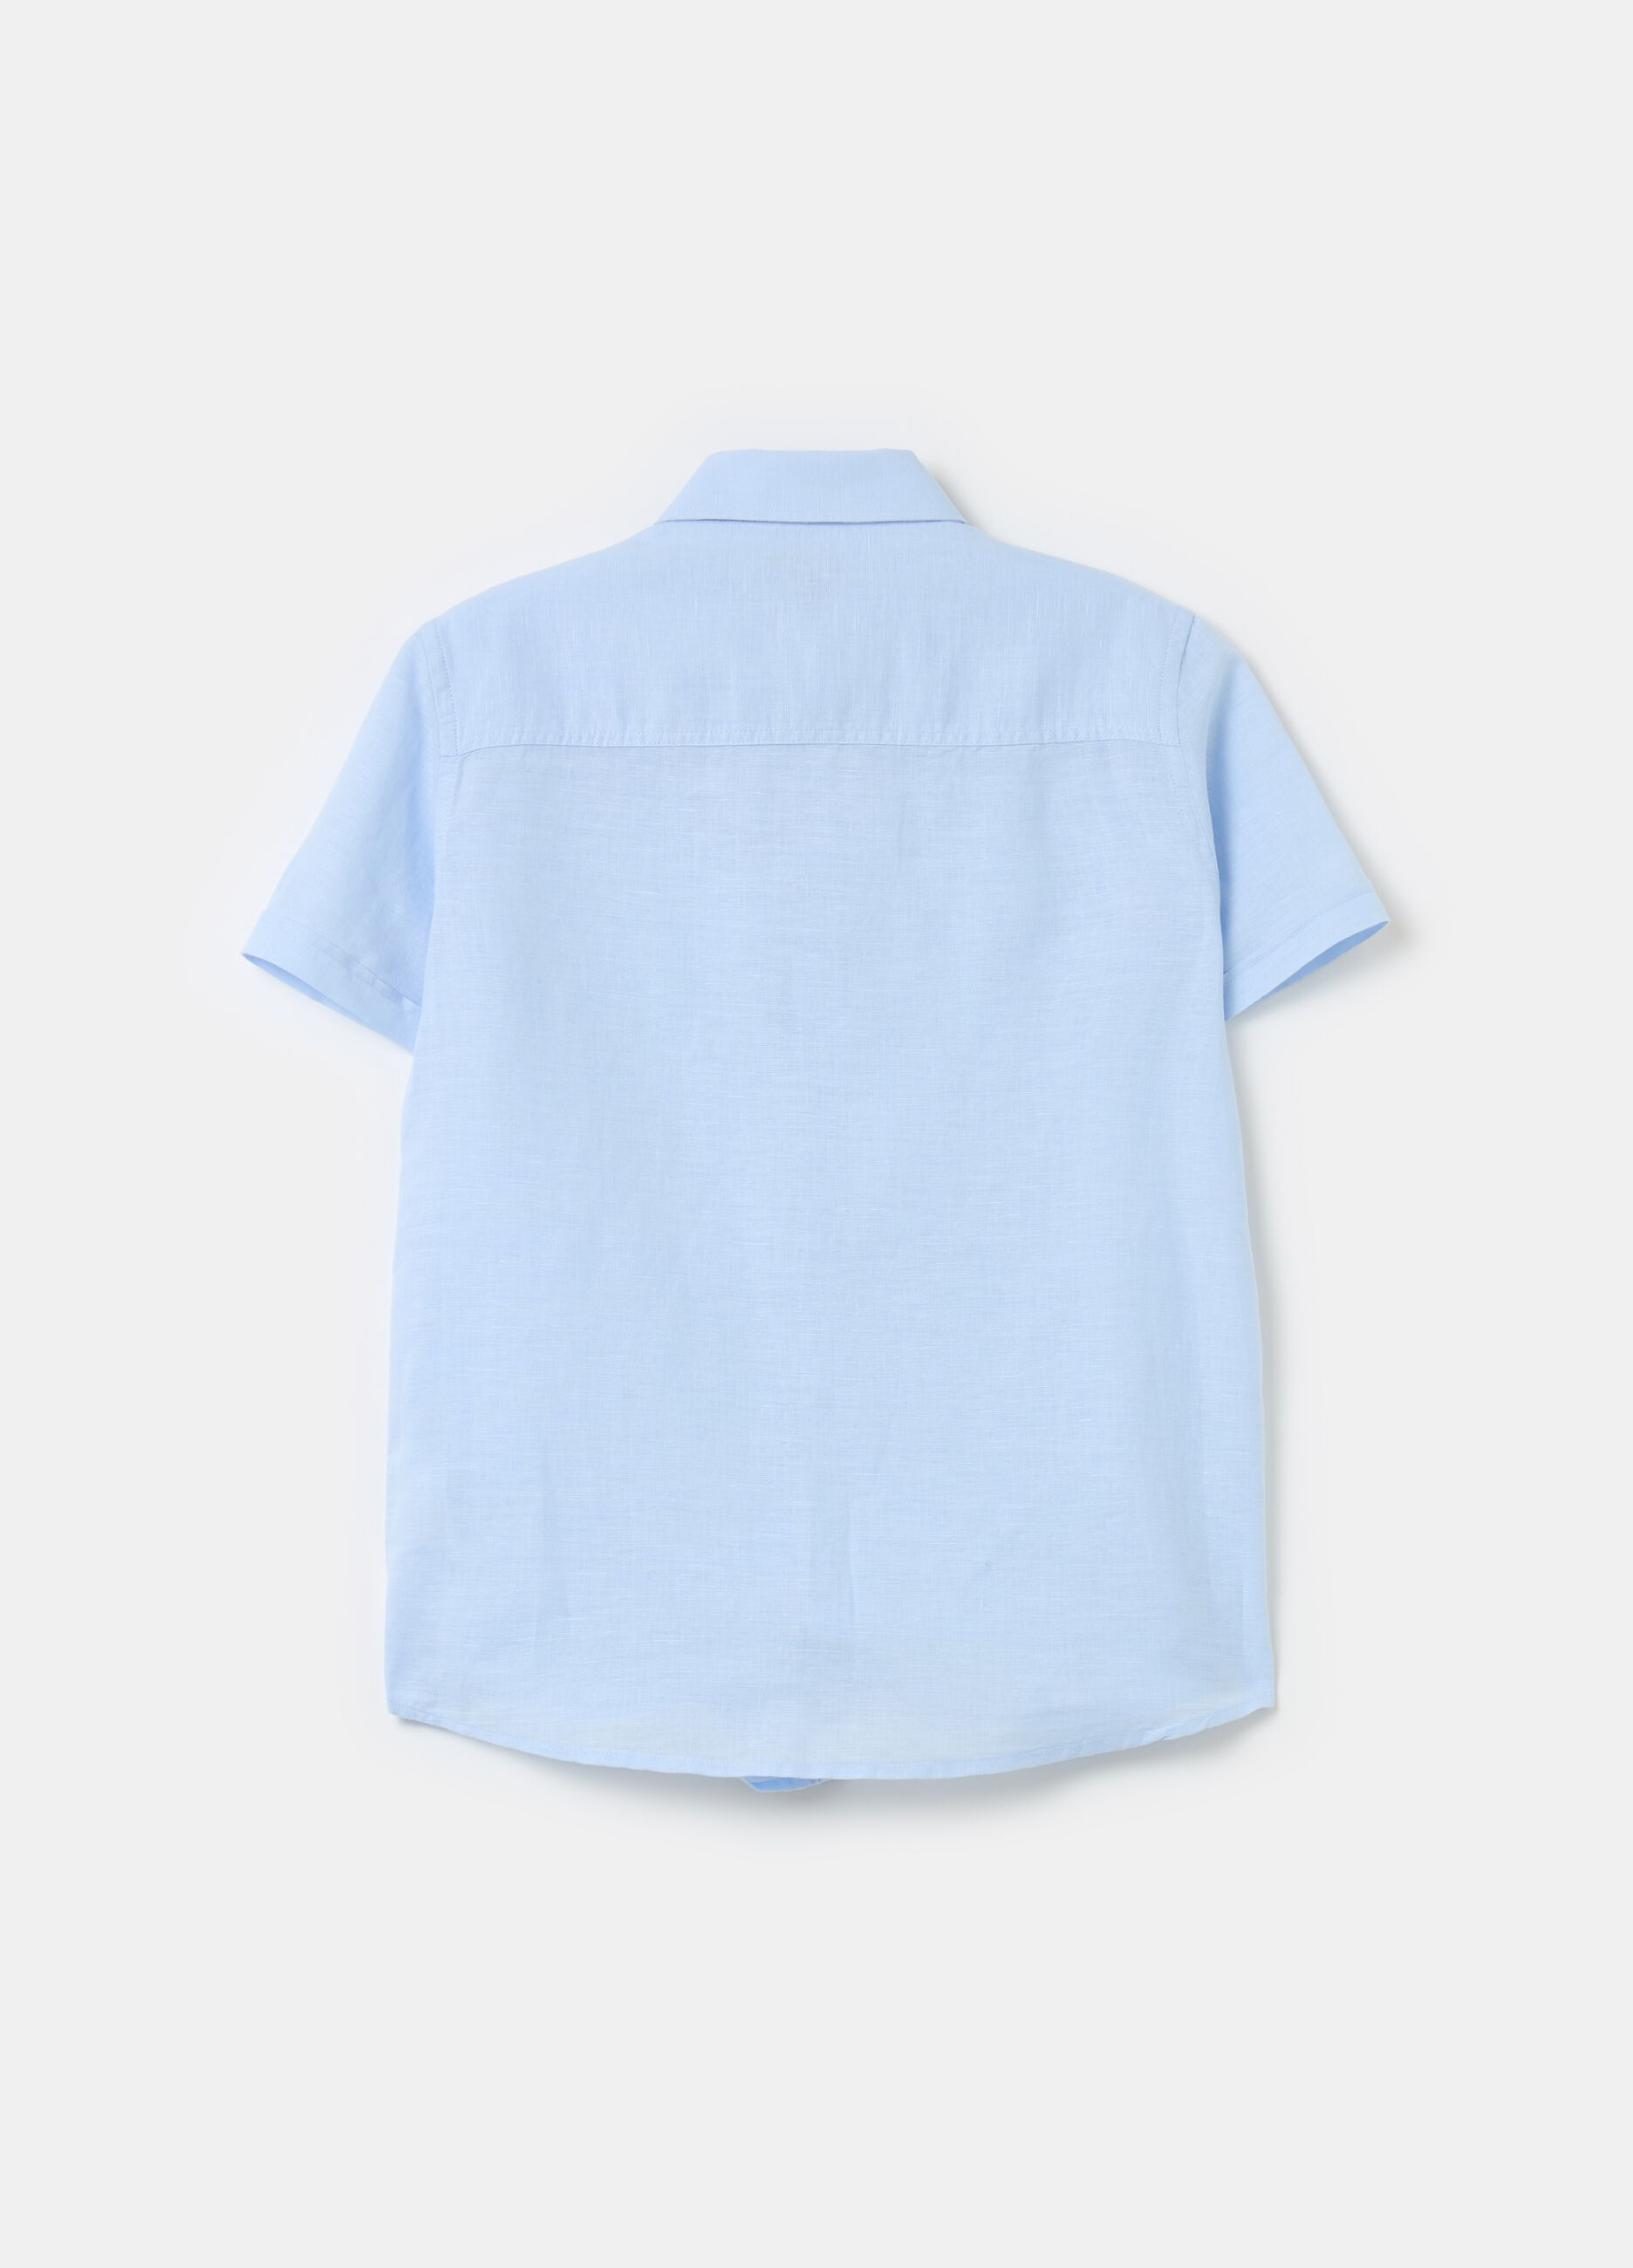 Linen and cotton shirt